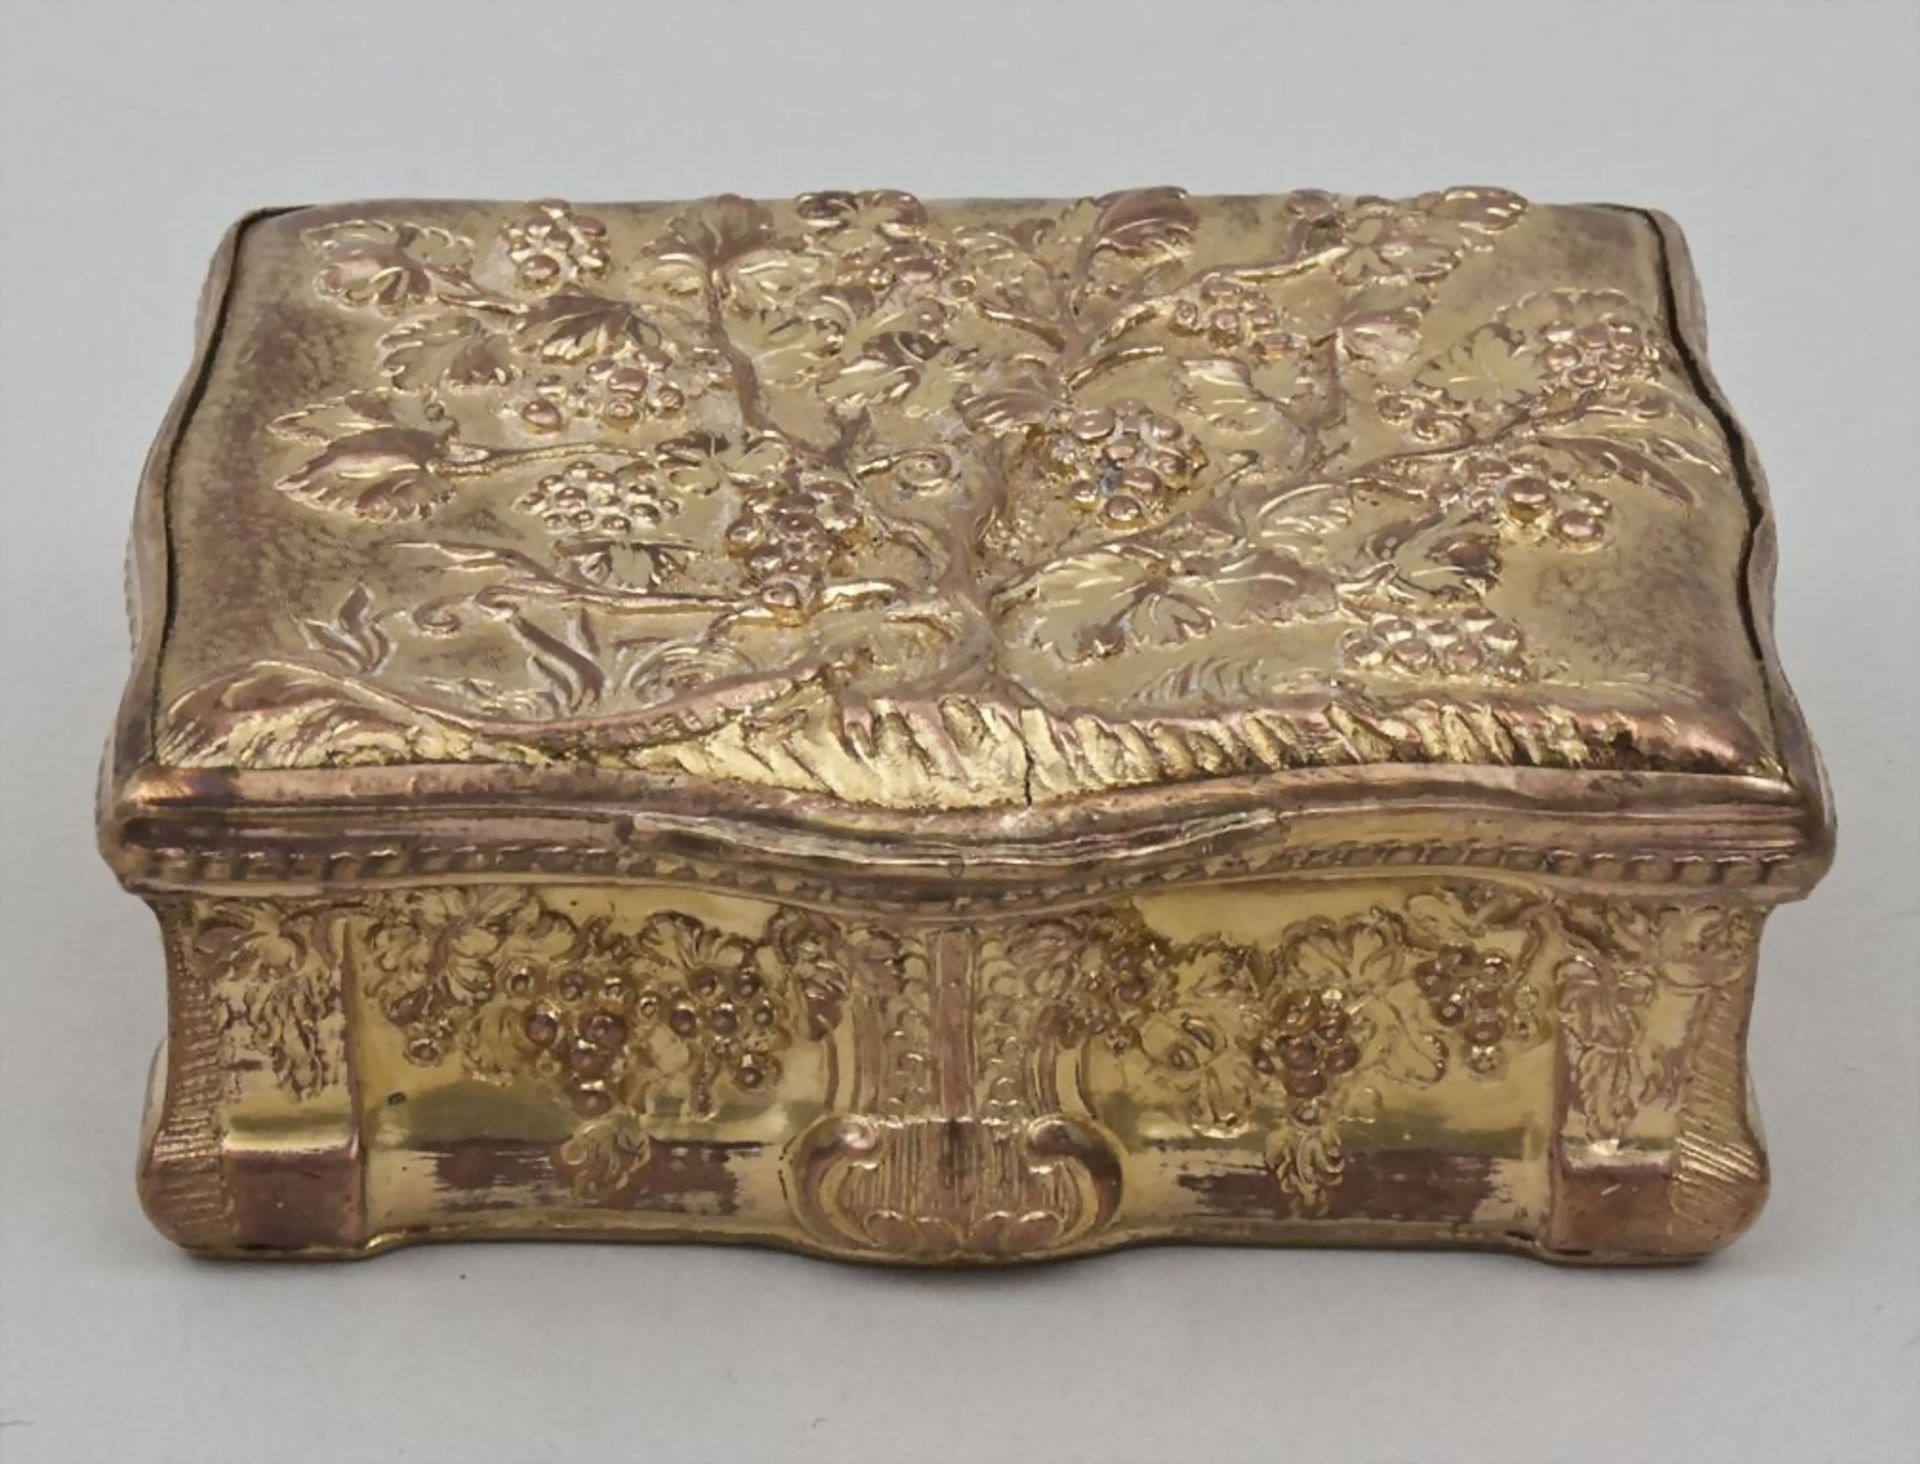 Barocke Bronze Tabatiere / Schnupftabakdose / A Baroque bronze snuffbox, um 1750